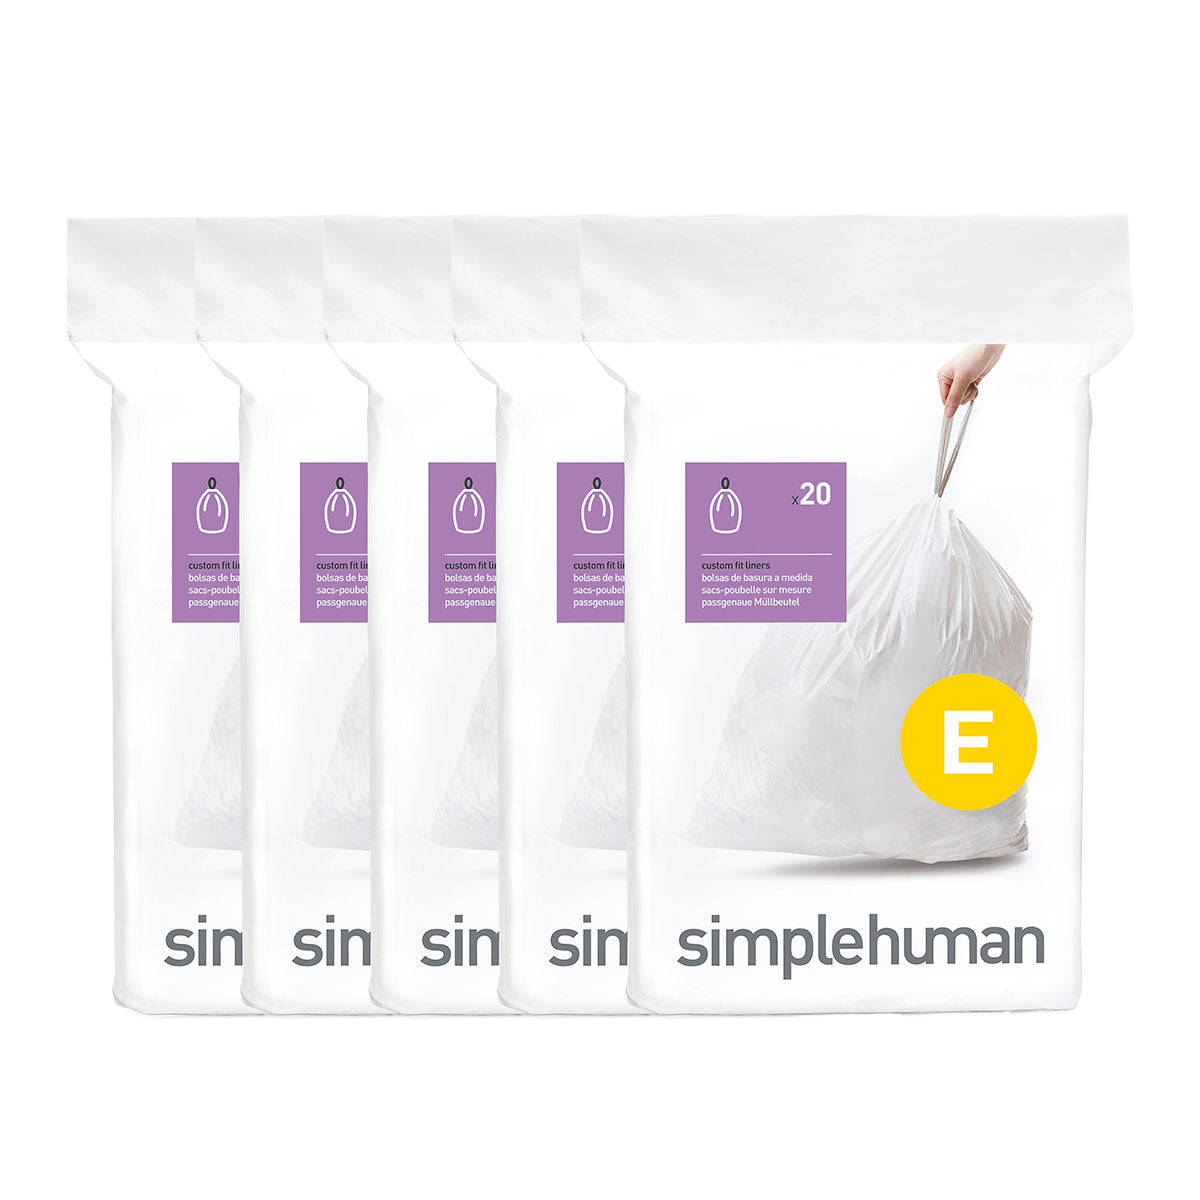 simplehuman Custom Fit Liners - Code J 240 Pack